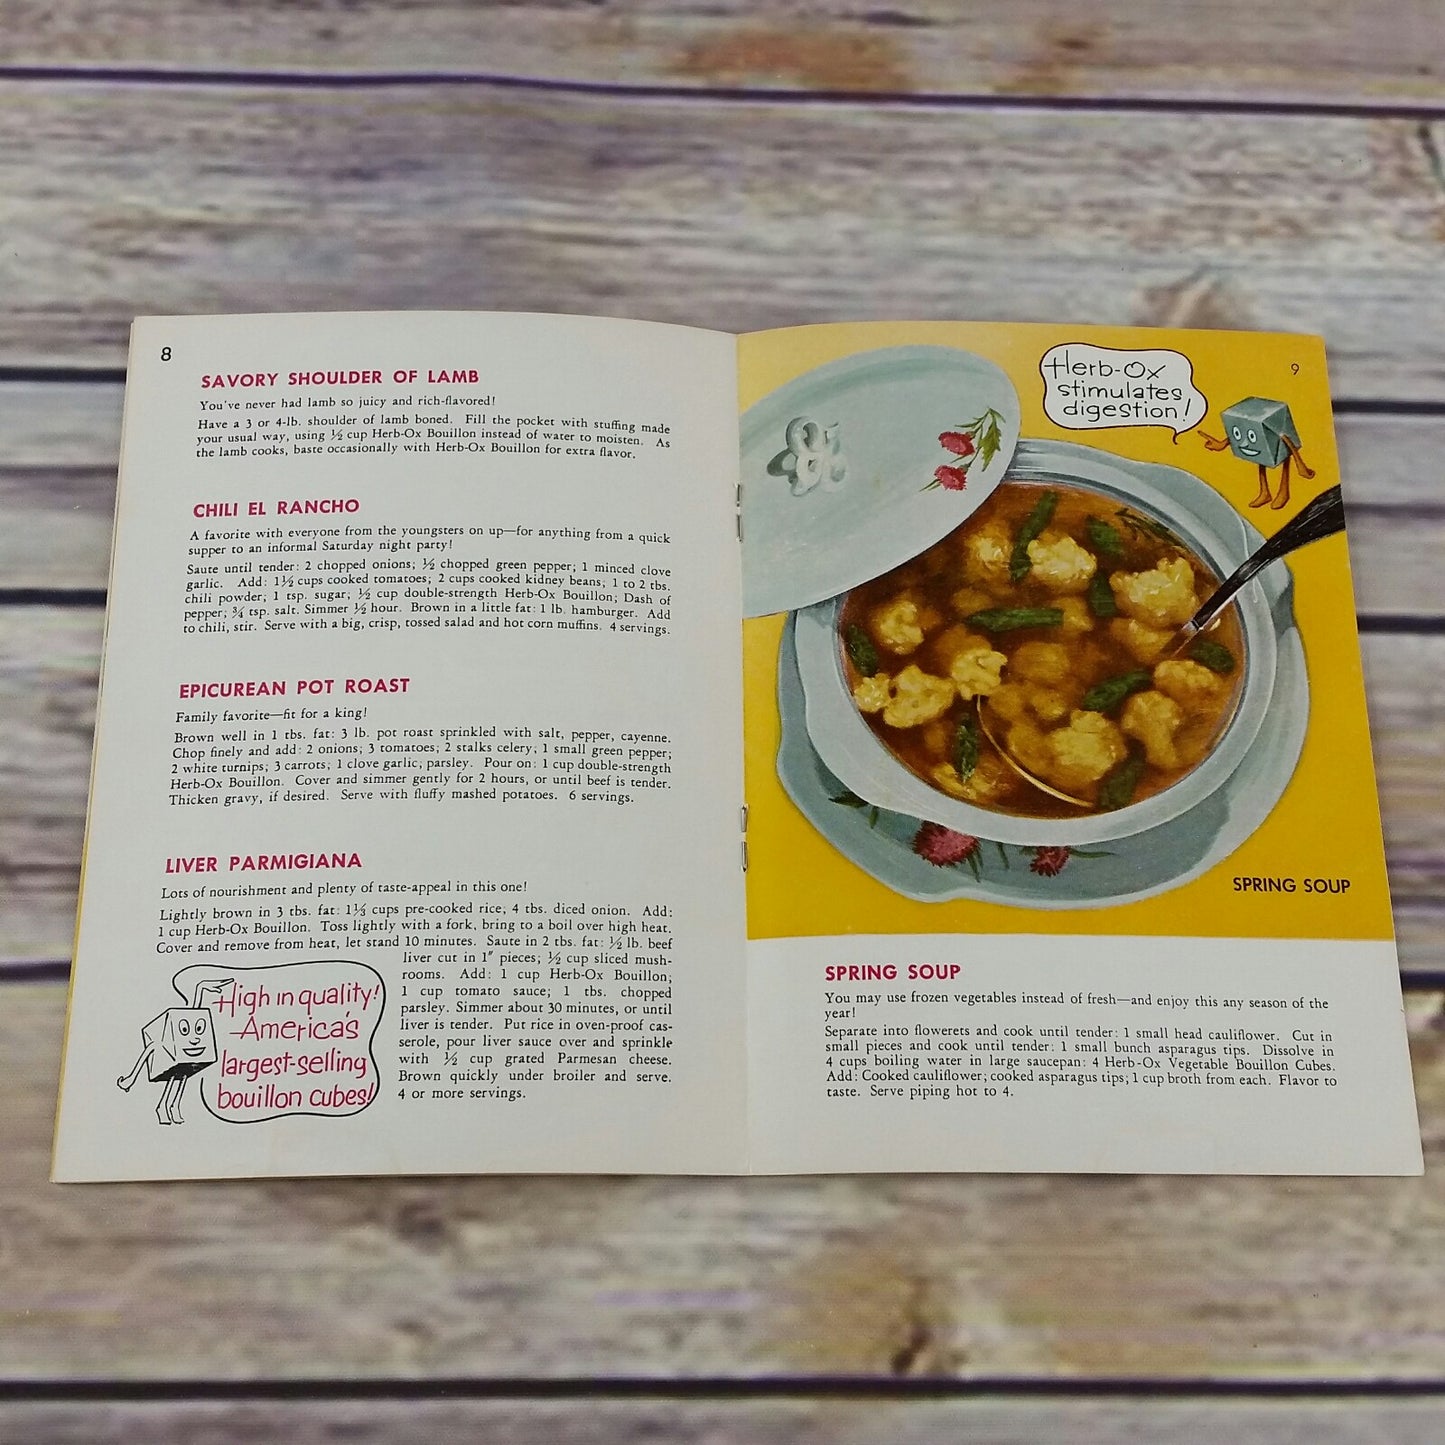 Vintage Cookbook Herb Ox Bouillon Money Saving Magic 1958 Booklet Promo Recipes Menus - At Grandma's Table